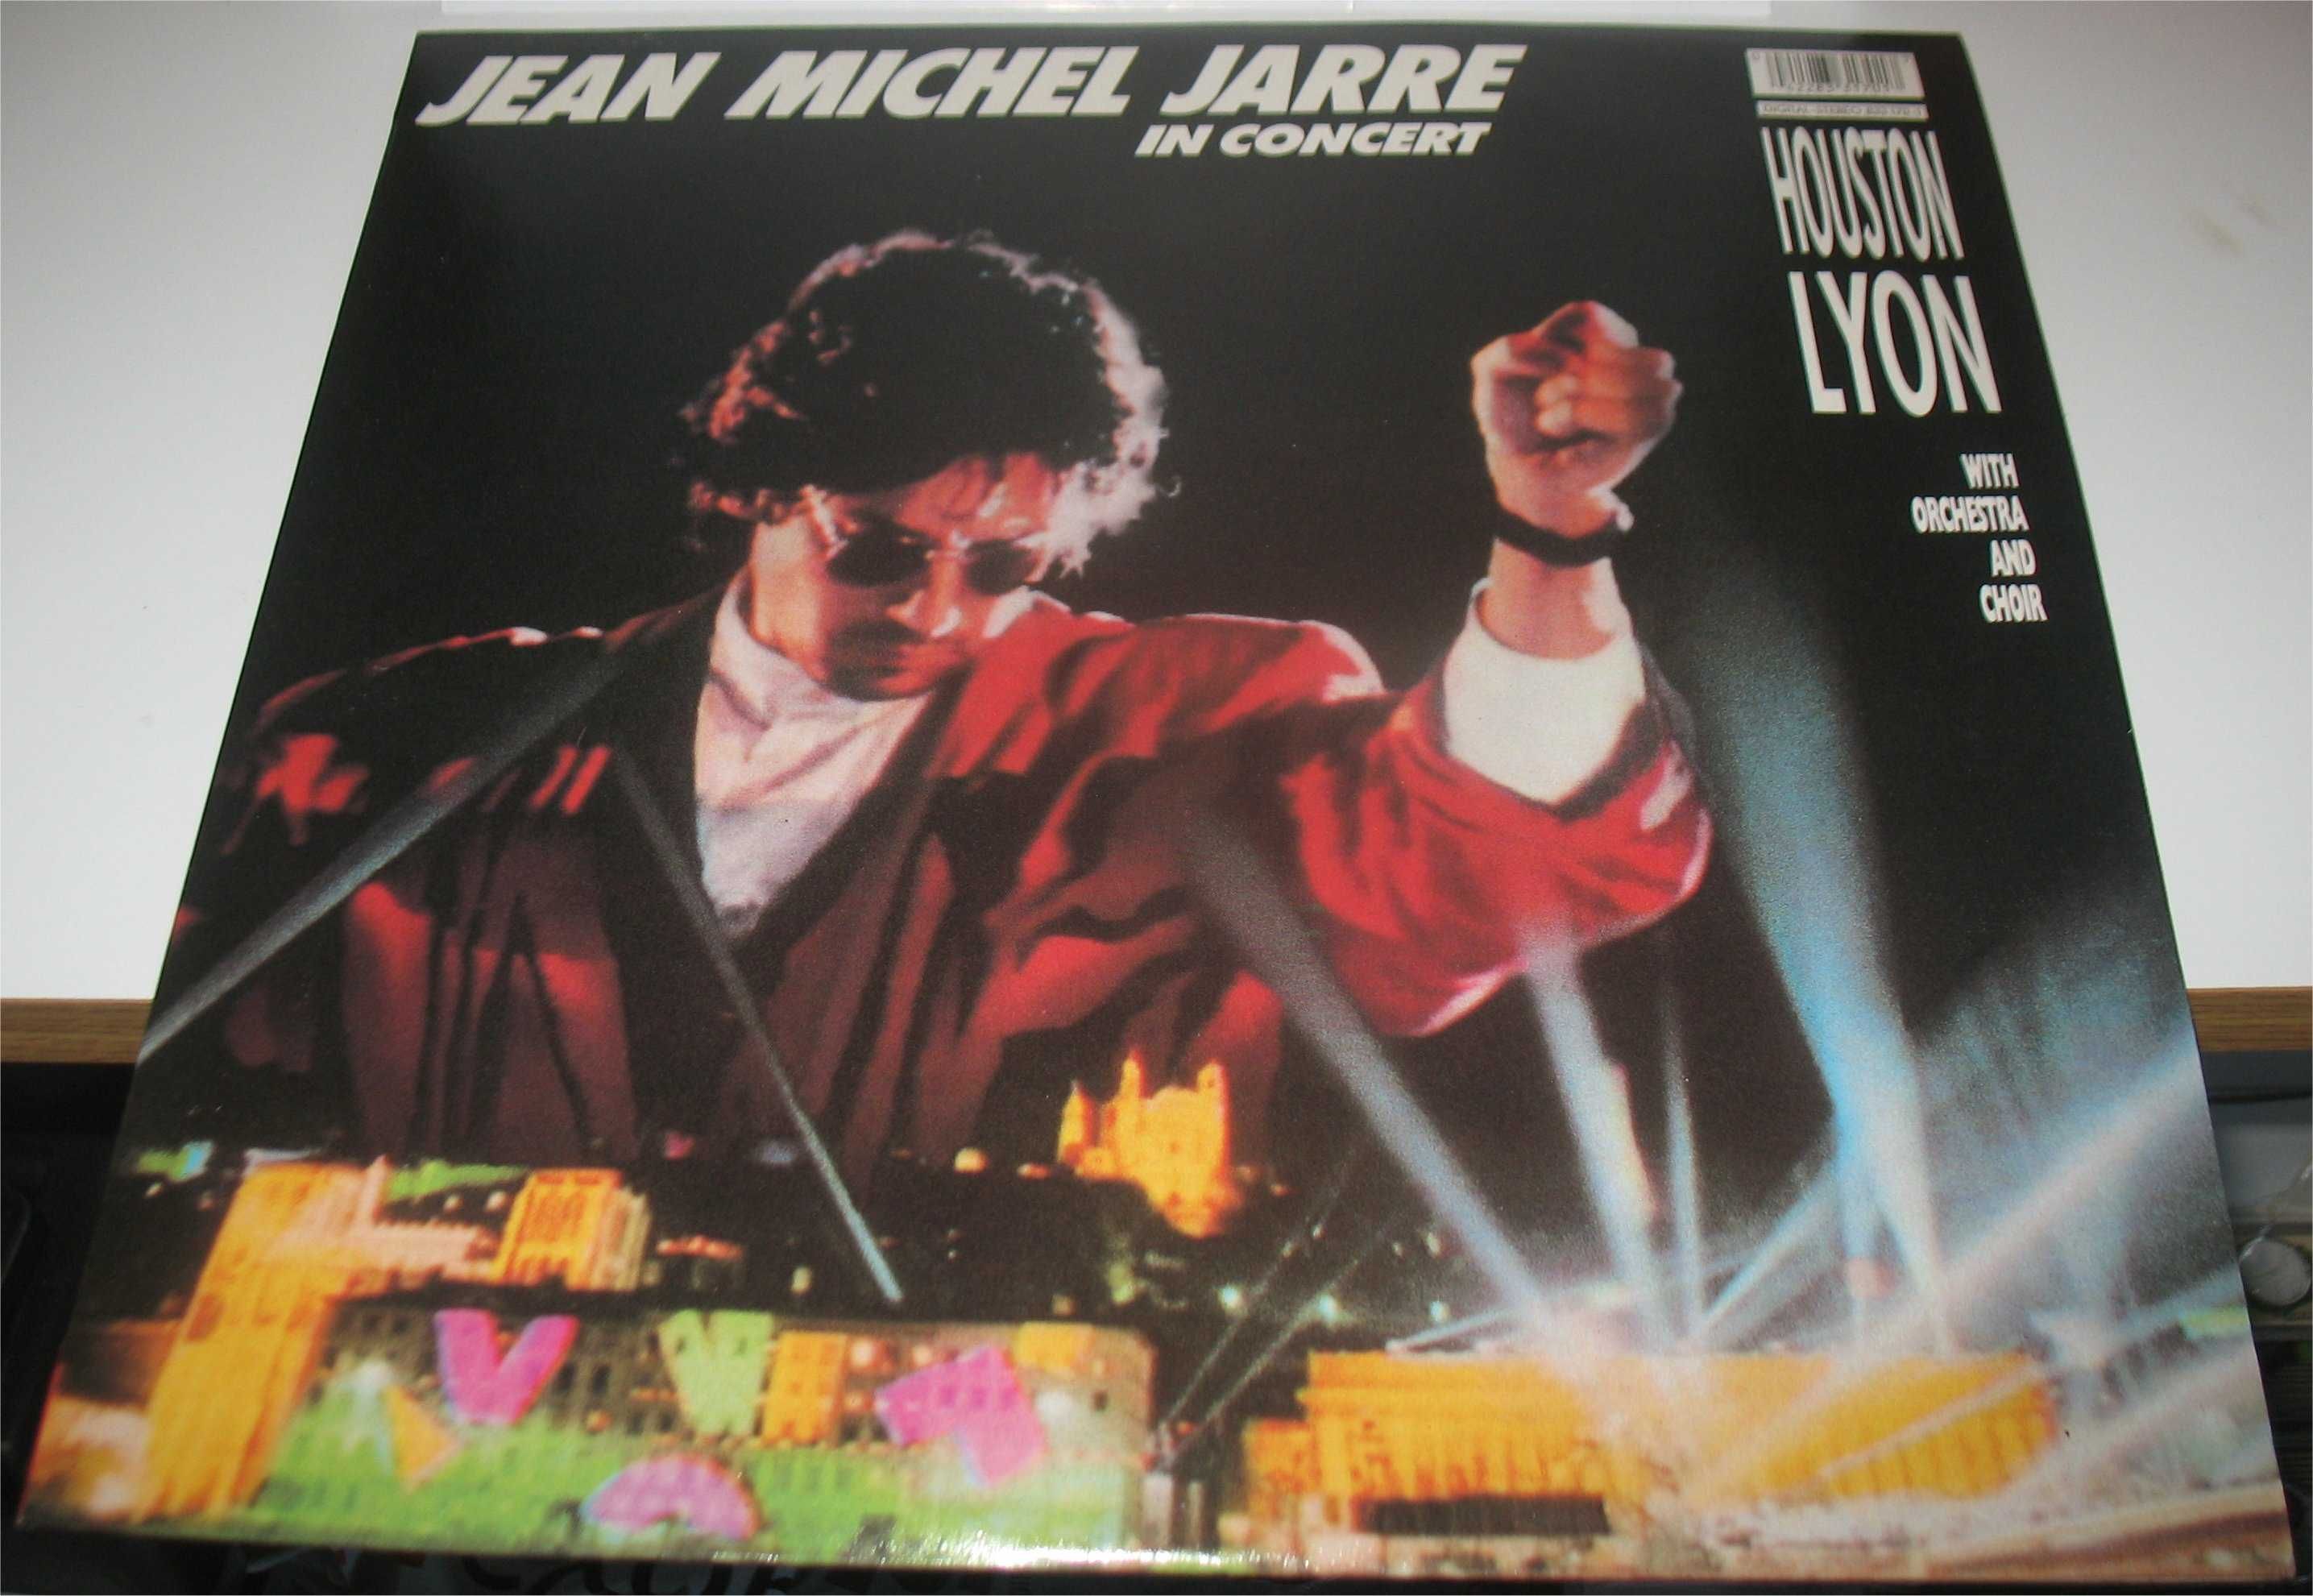 Jean Michel Jarre - In Concert - Houston Lyon - LP